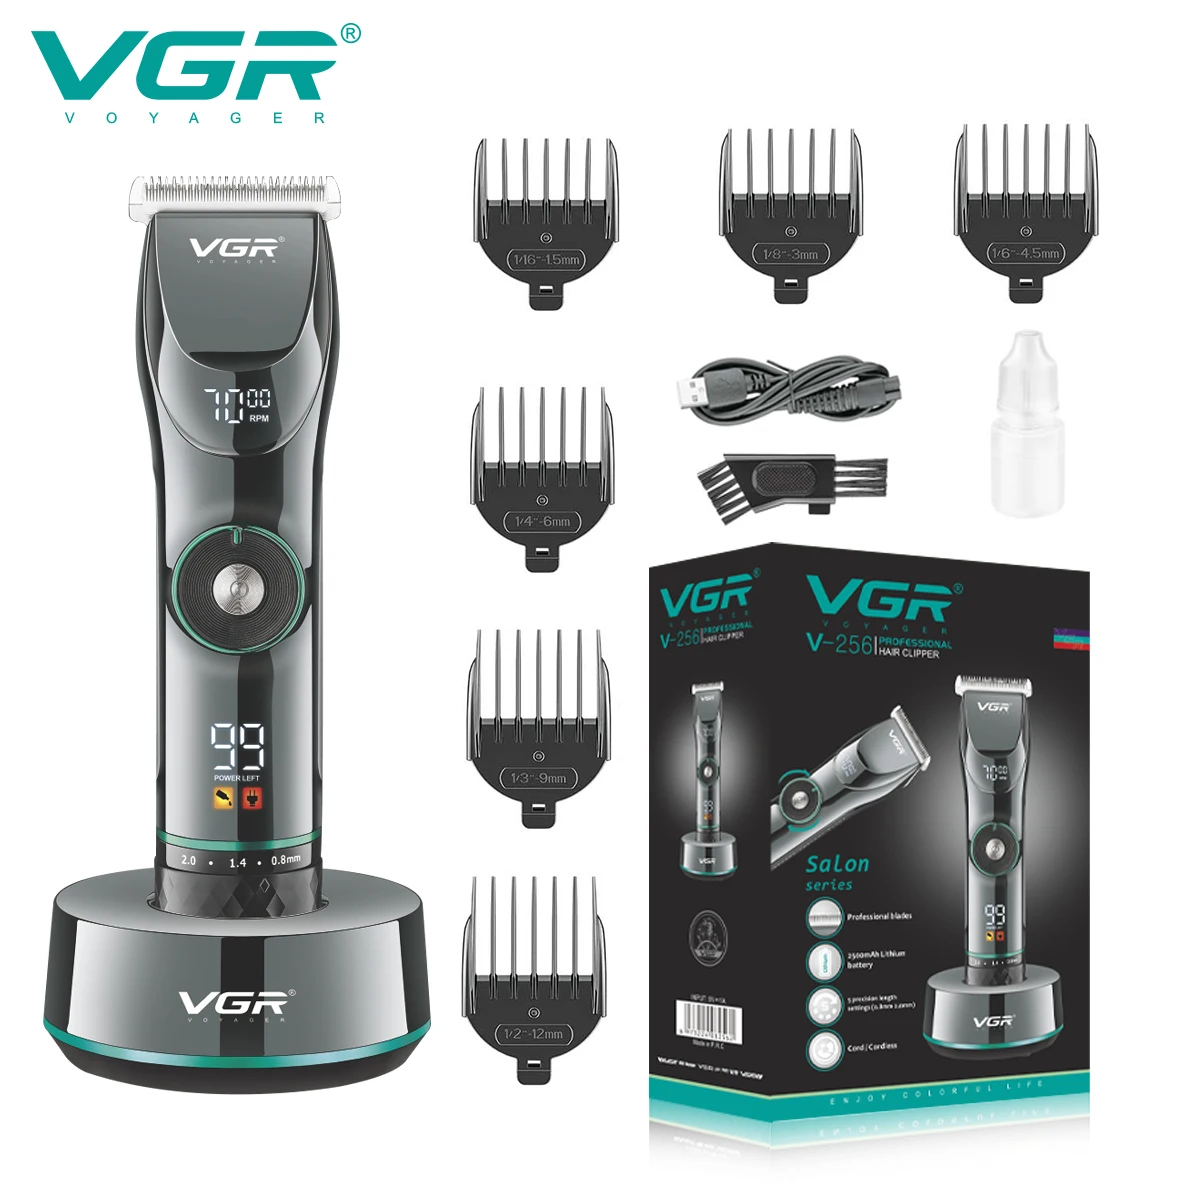 VGR Hair Cutting Machine Adjustable Hair Trimmer Cordless Clipper Electric Barber LED Display Trimmer for Men with Base V-256